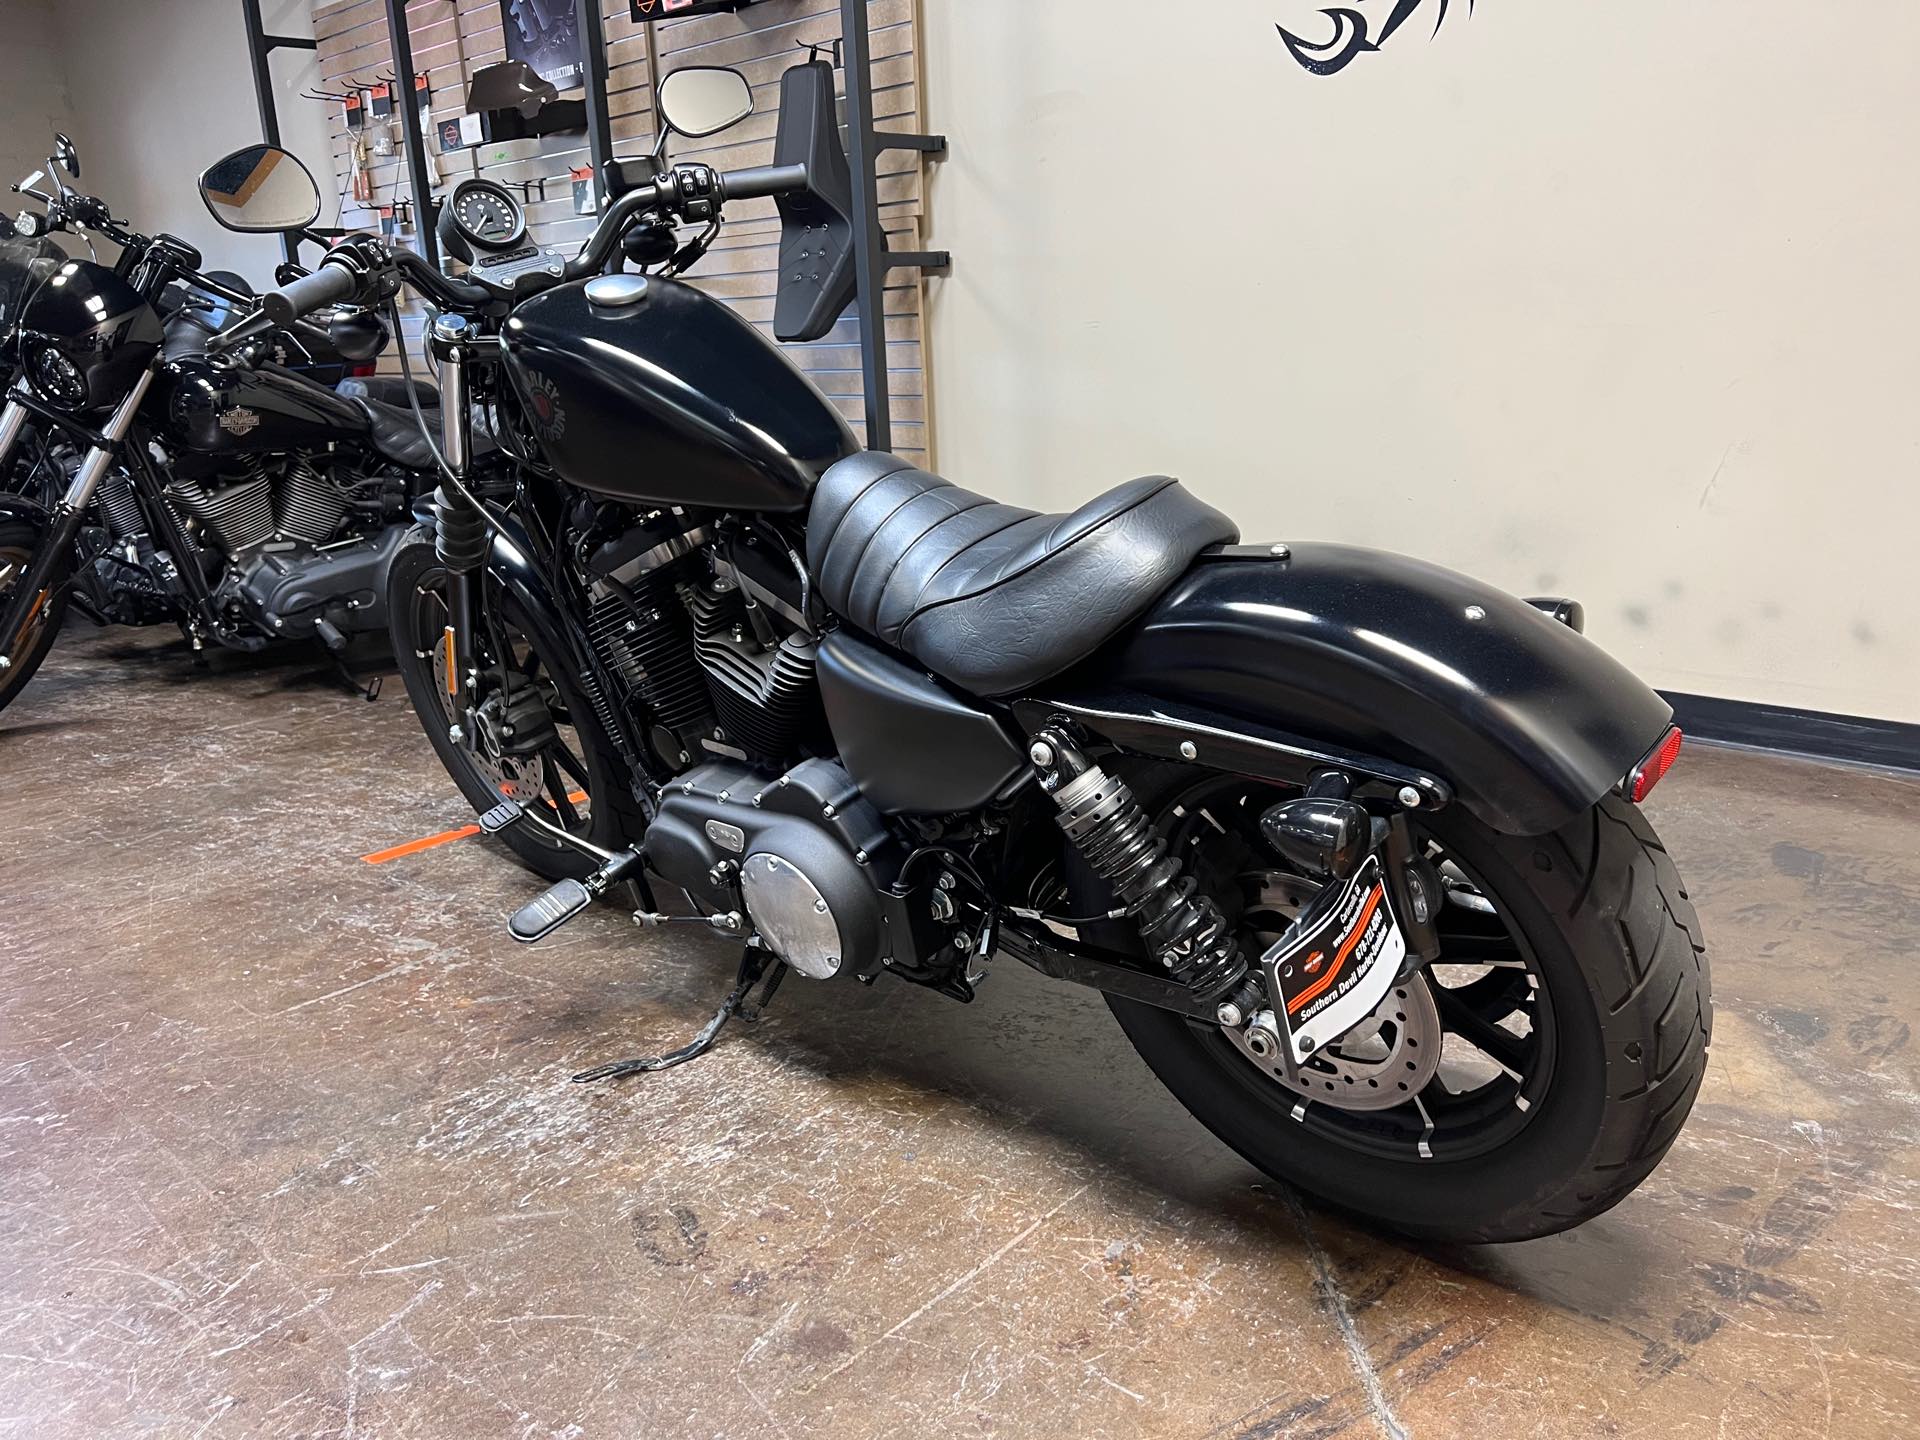 2022 Harley-Davidson Sportster Iron 883 at Southern Devil Harley-Davidson